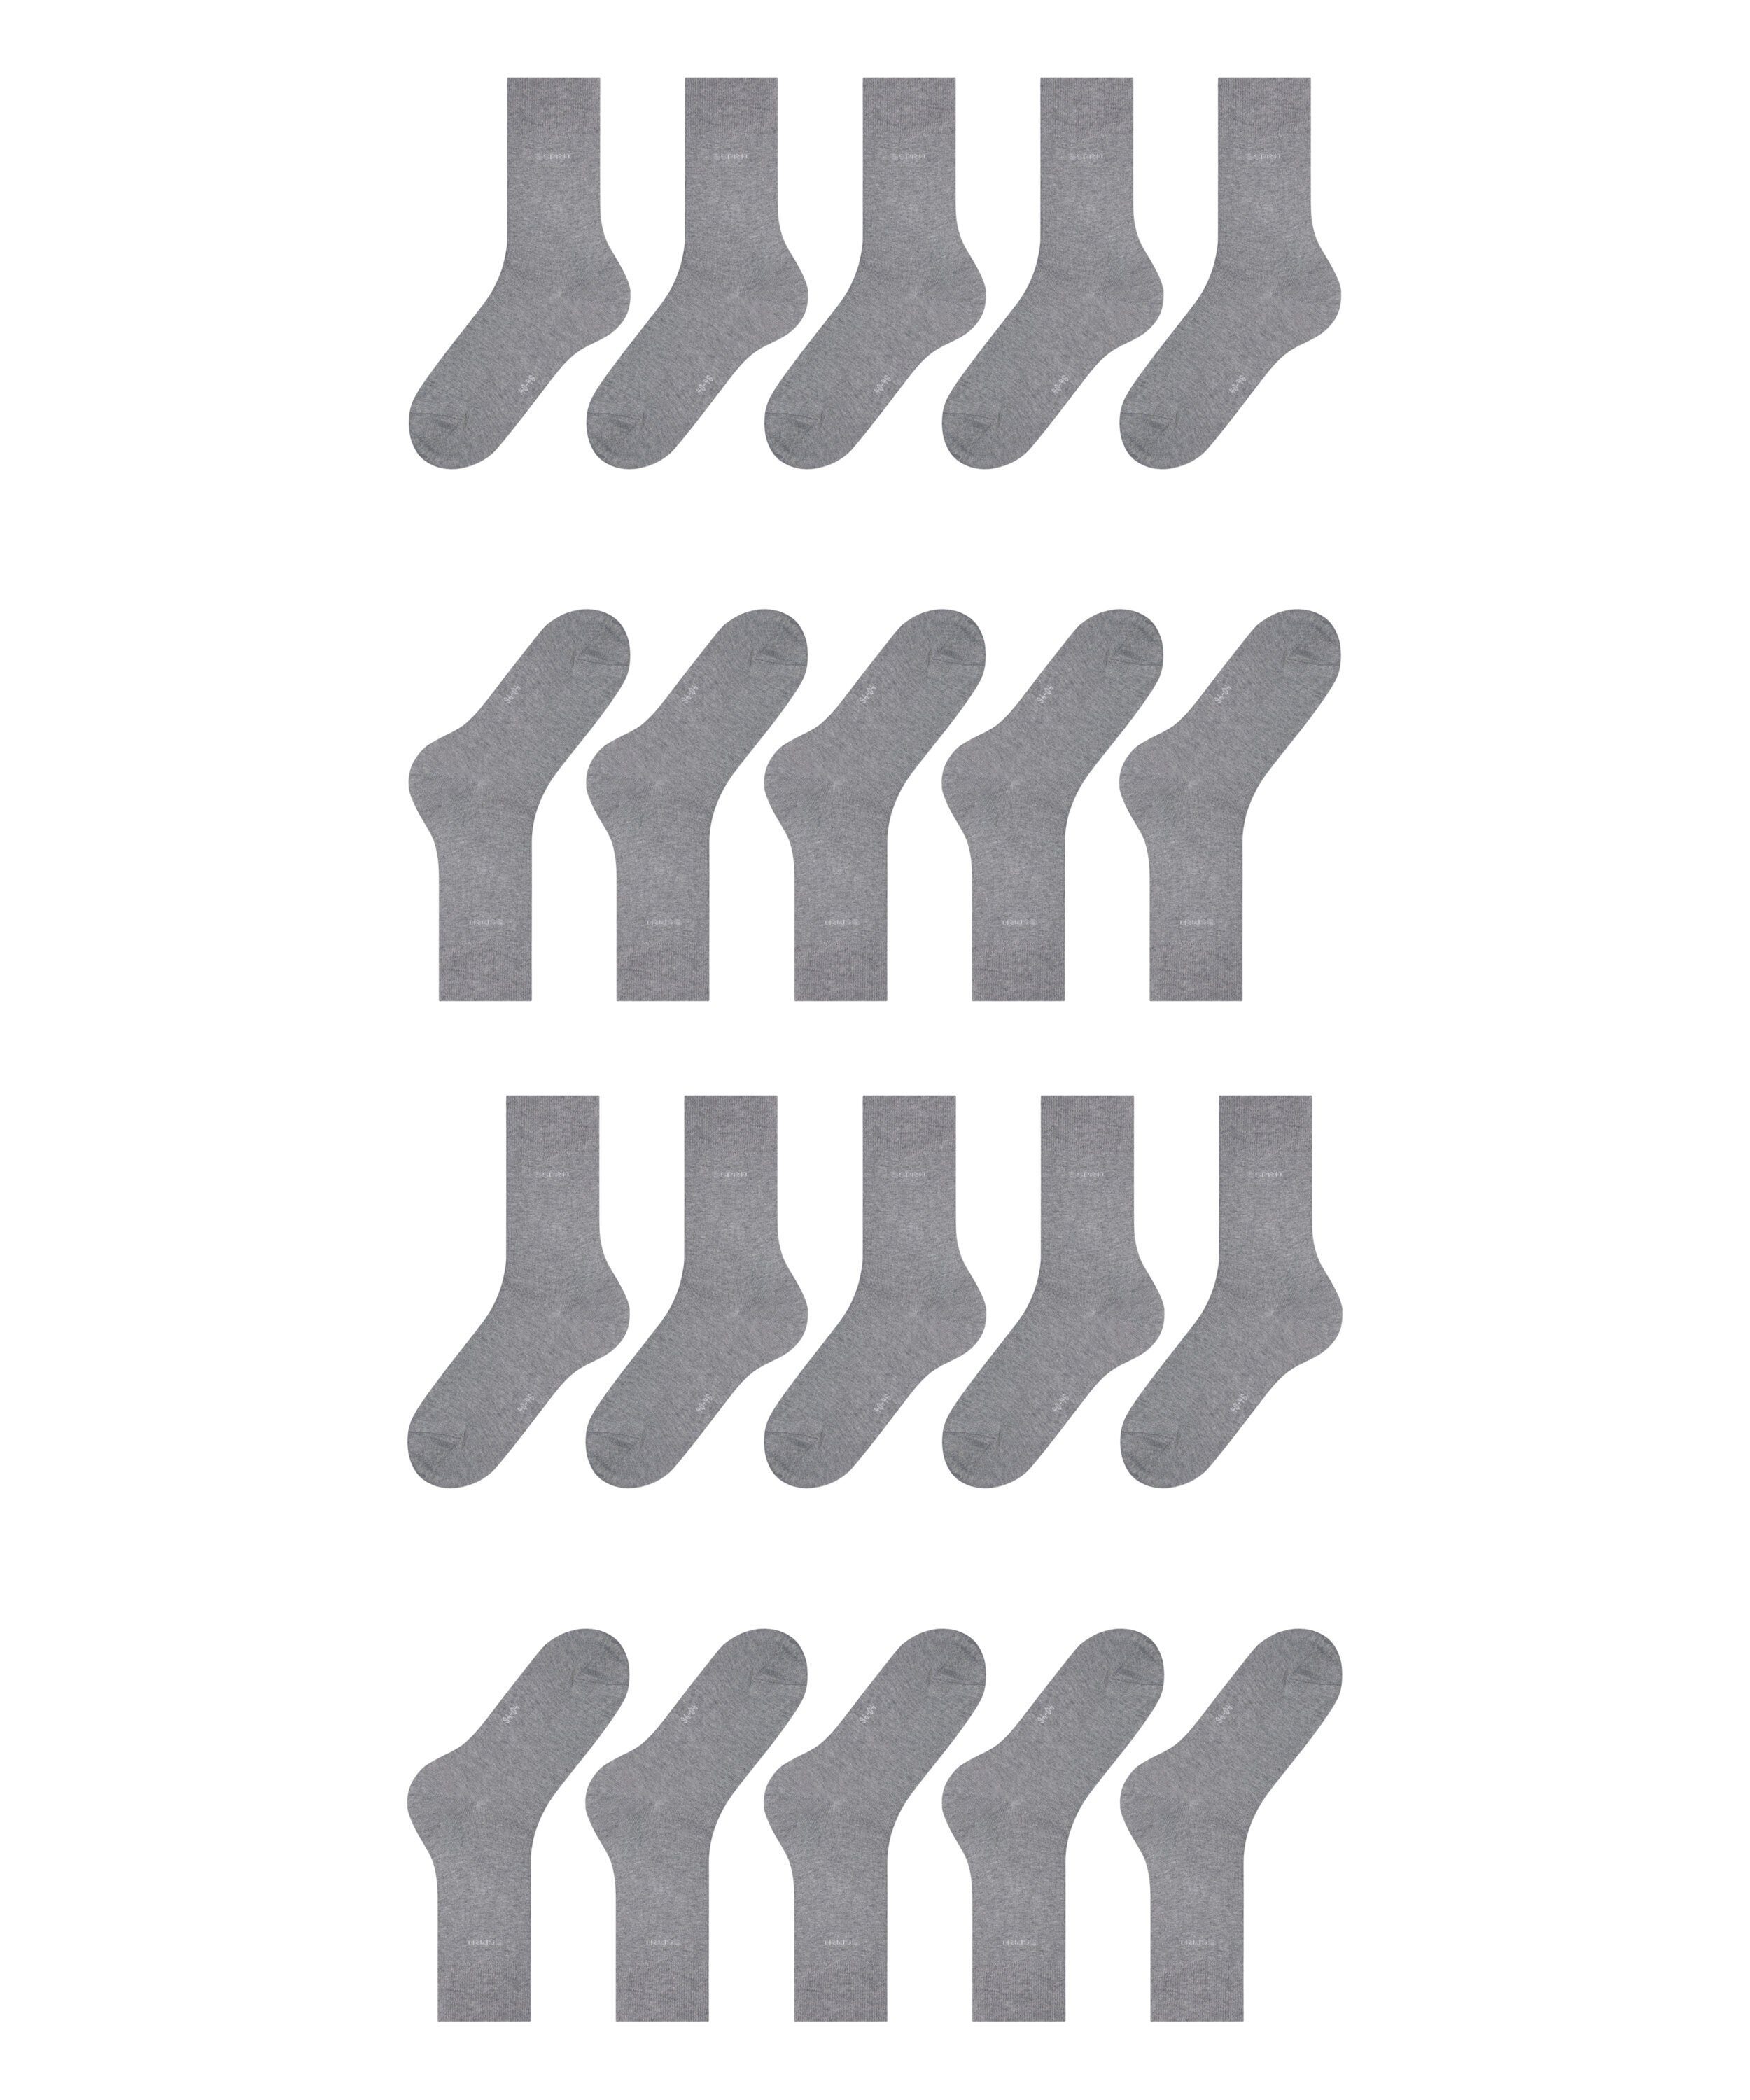 Esprit Socken Uni light greymel. 10-Pack (3390) (10-Paar)